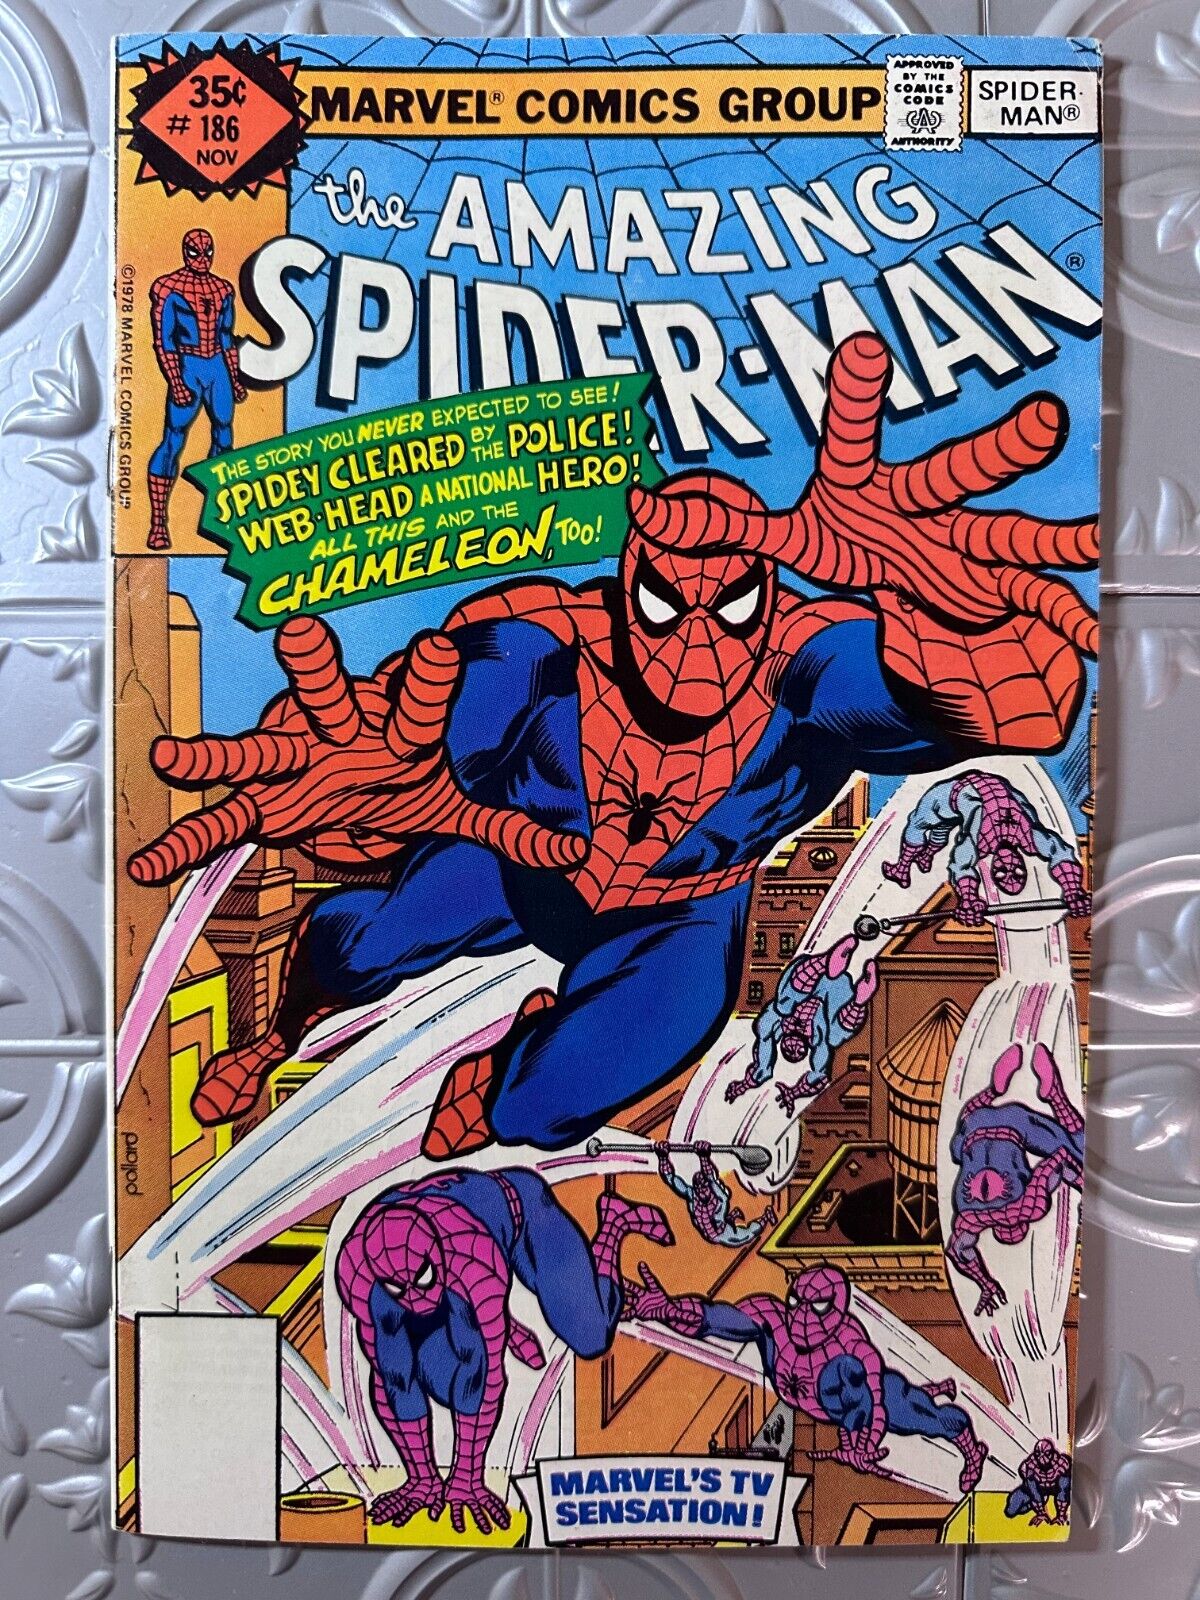 The Amazing Spider-Man #186 (Marvel Comics Nov 1978) the Chameleon